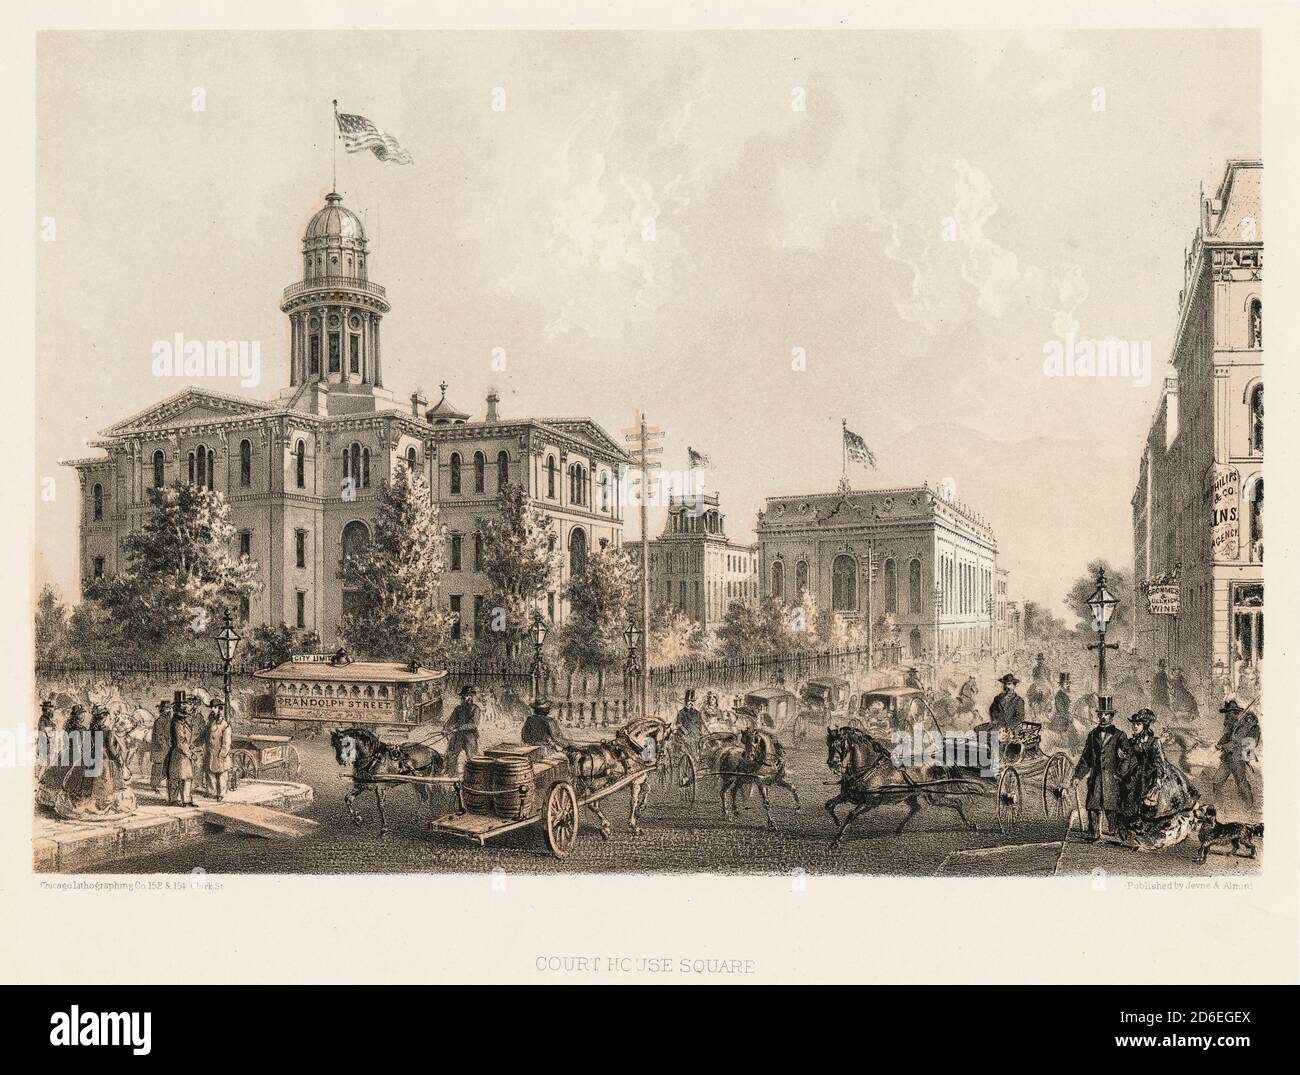 Jevne and Almini lithograph titled Court House Square, Chicago, Illinois, circa 1866. Stock Photo